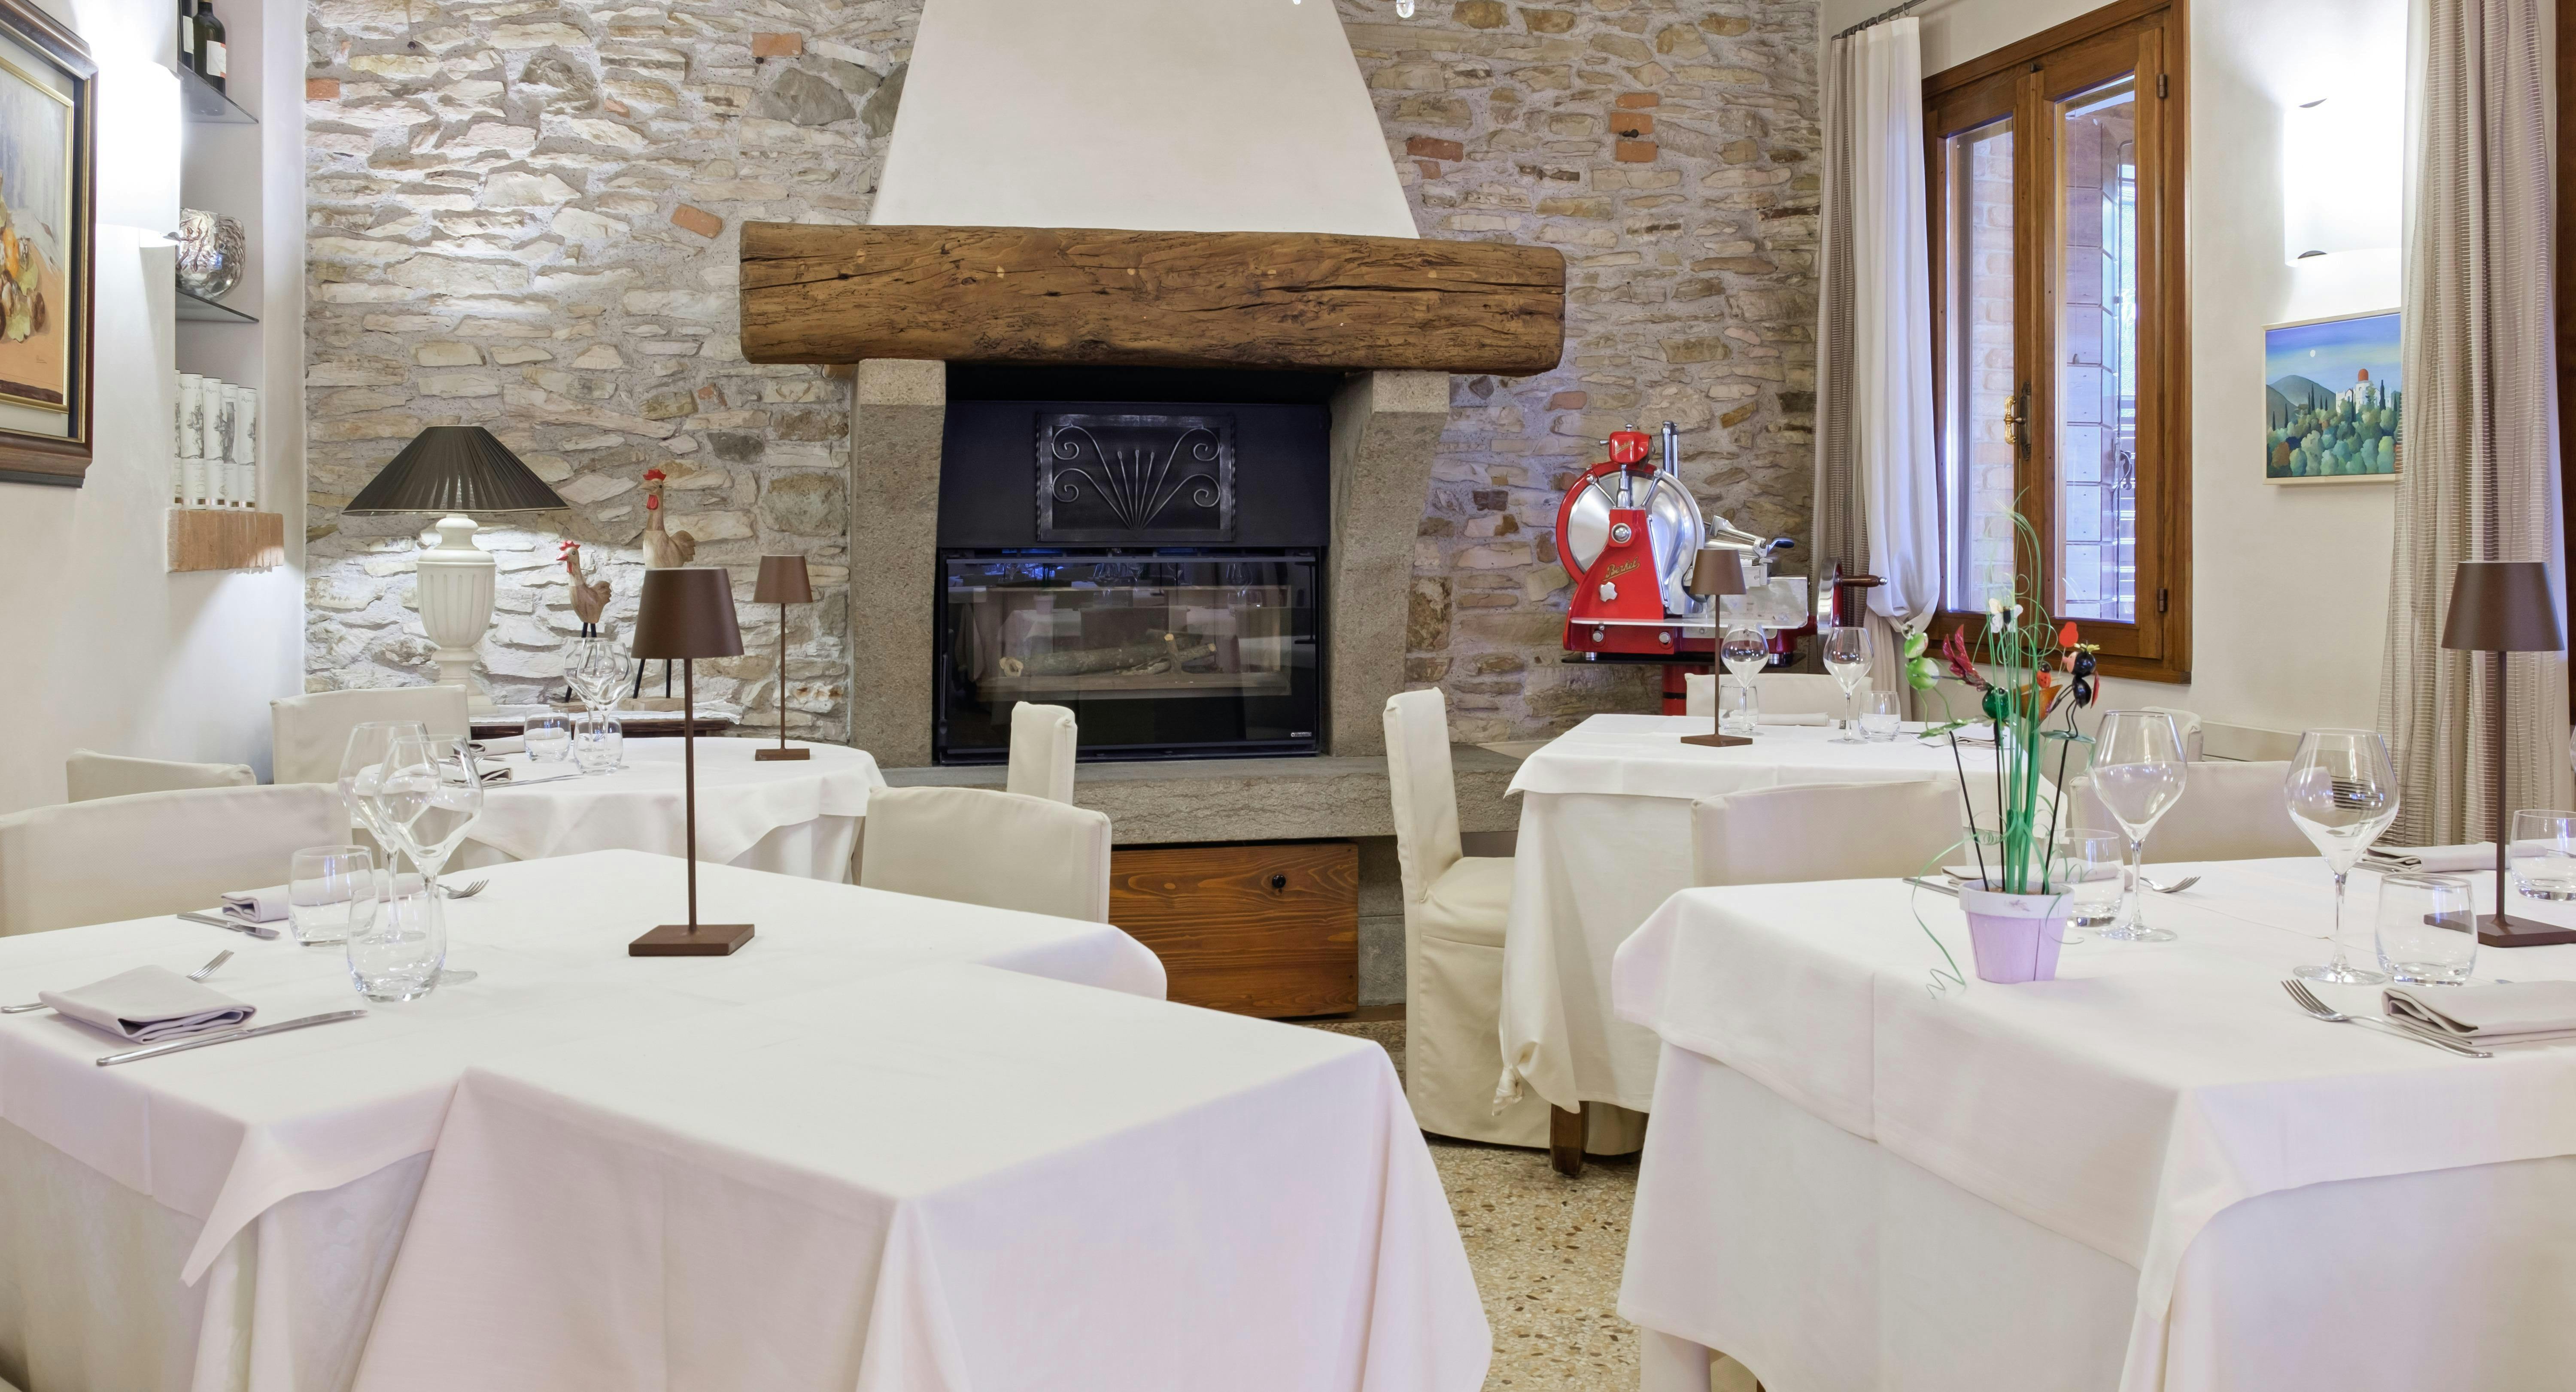 Photo of restaurant Ristorante Val Pomaro in Arquà Petrarca, Padua